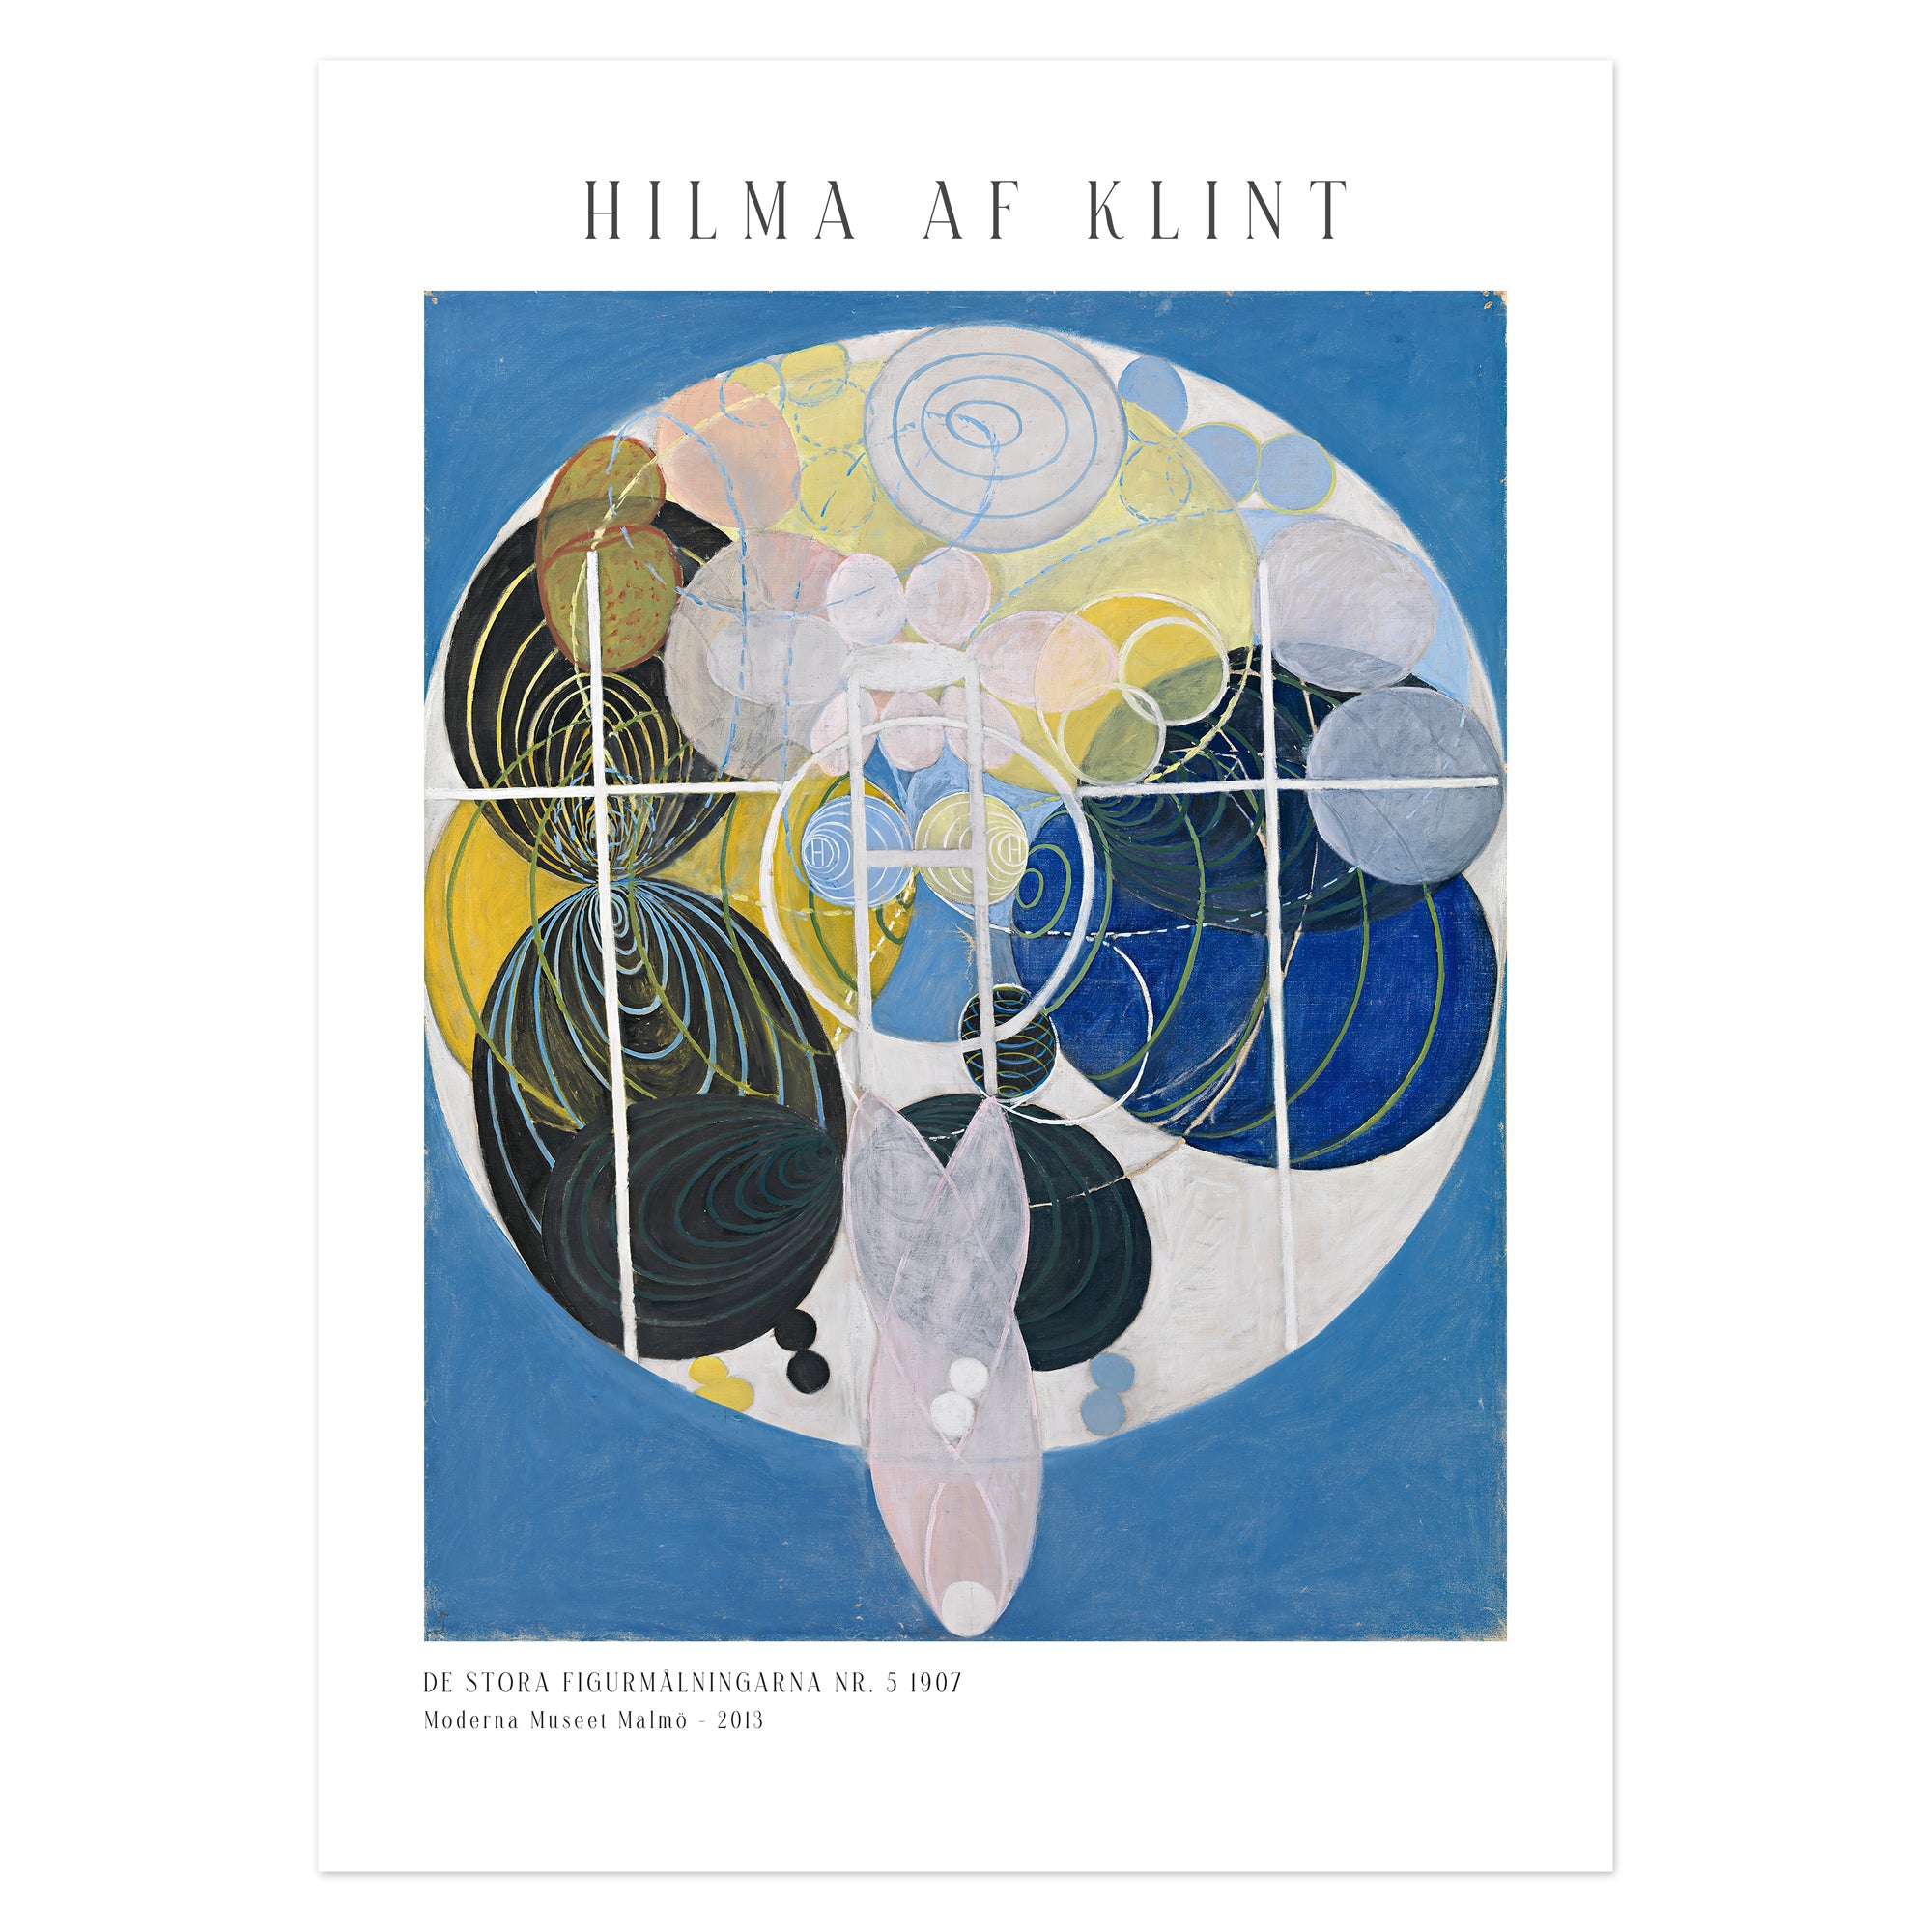 Hilma af Klint Poster - De stora figurmålningarna nr. 5